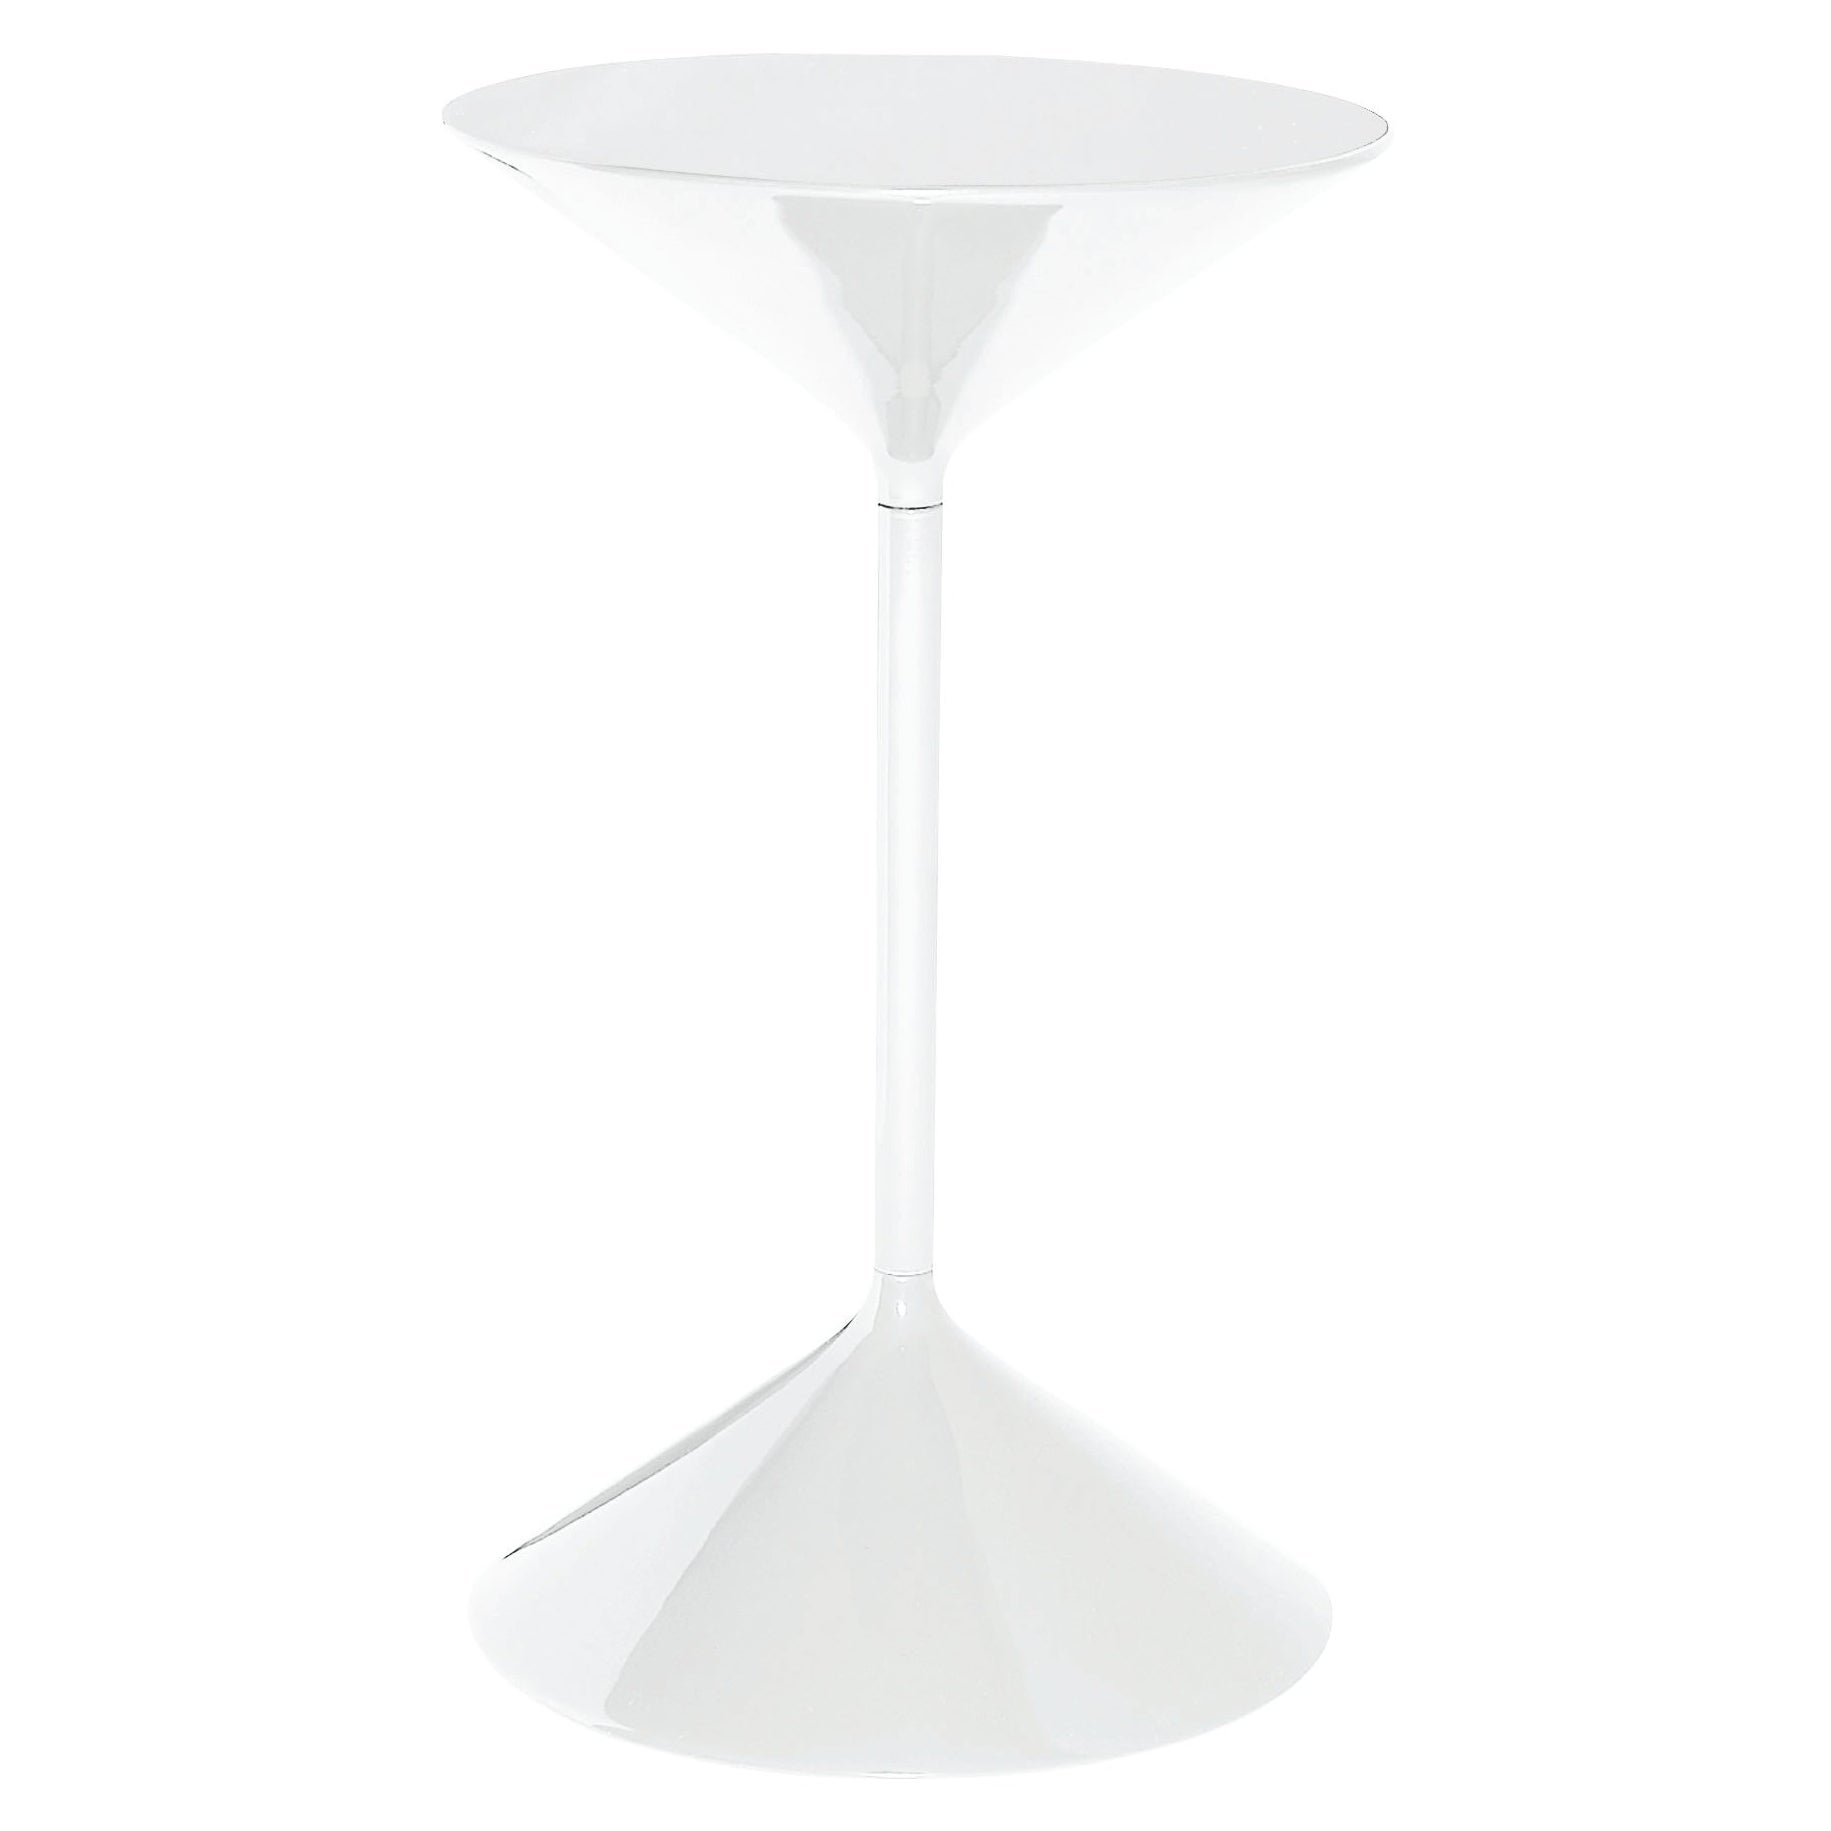 Petite table Zanotta Tempo en finition blanche avec plateau laqué par Prospero Rasulo